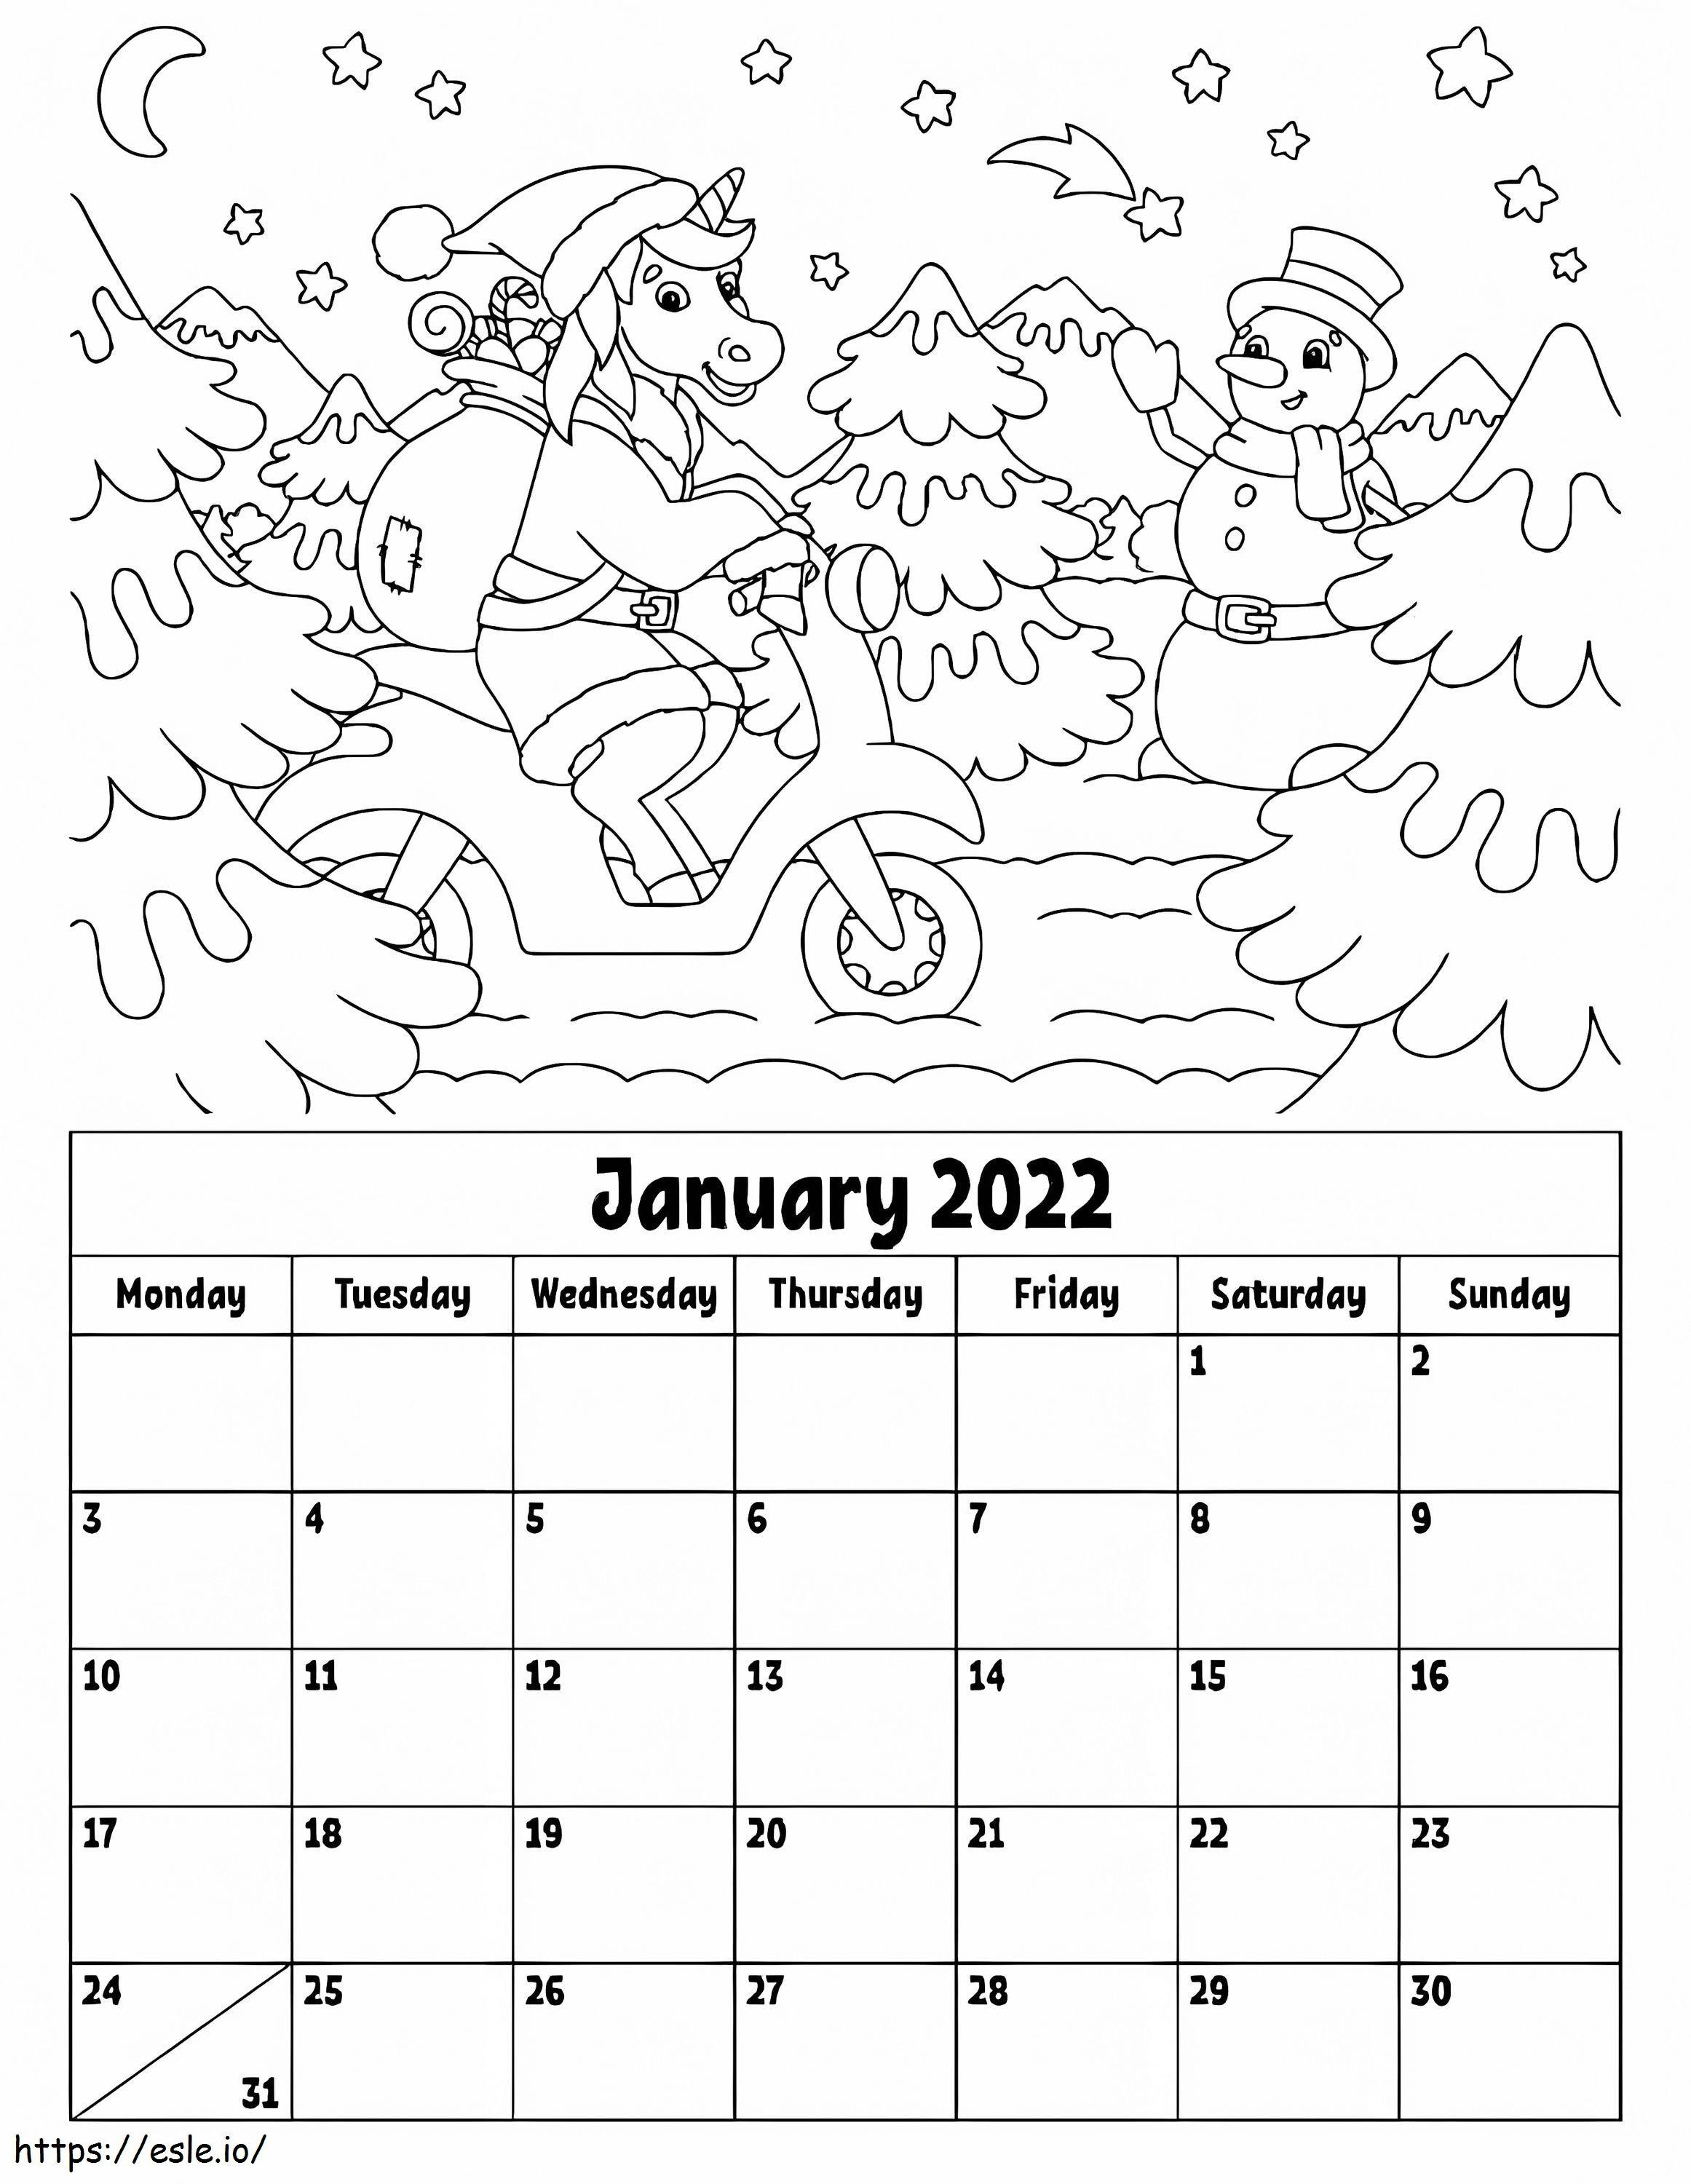 Calendario gennaio 2022 da colorare